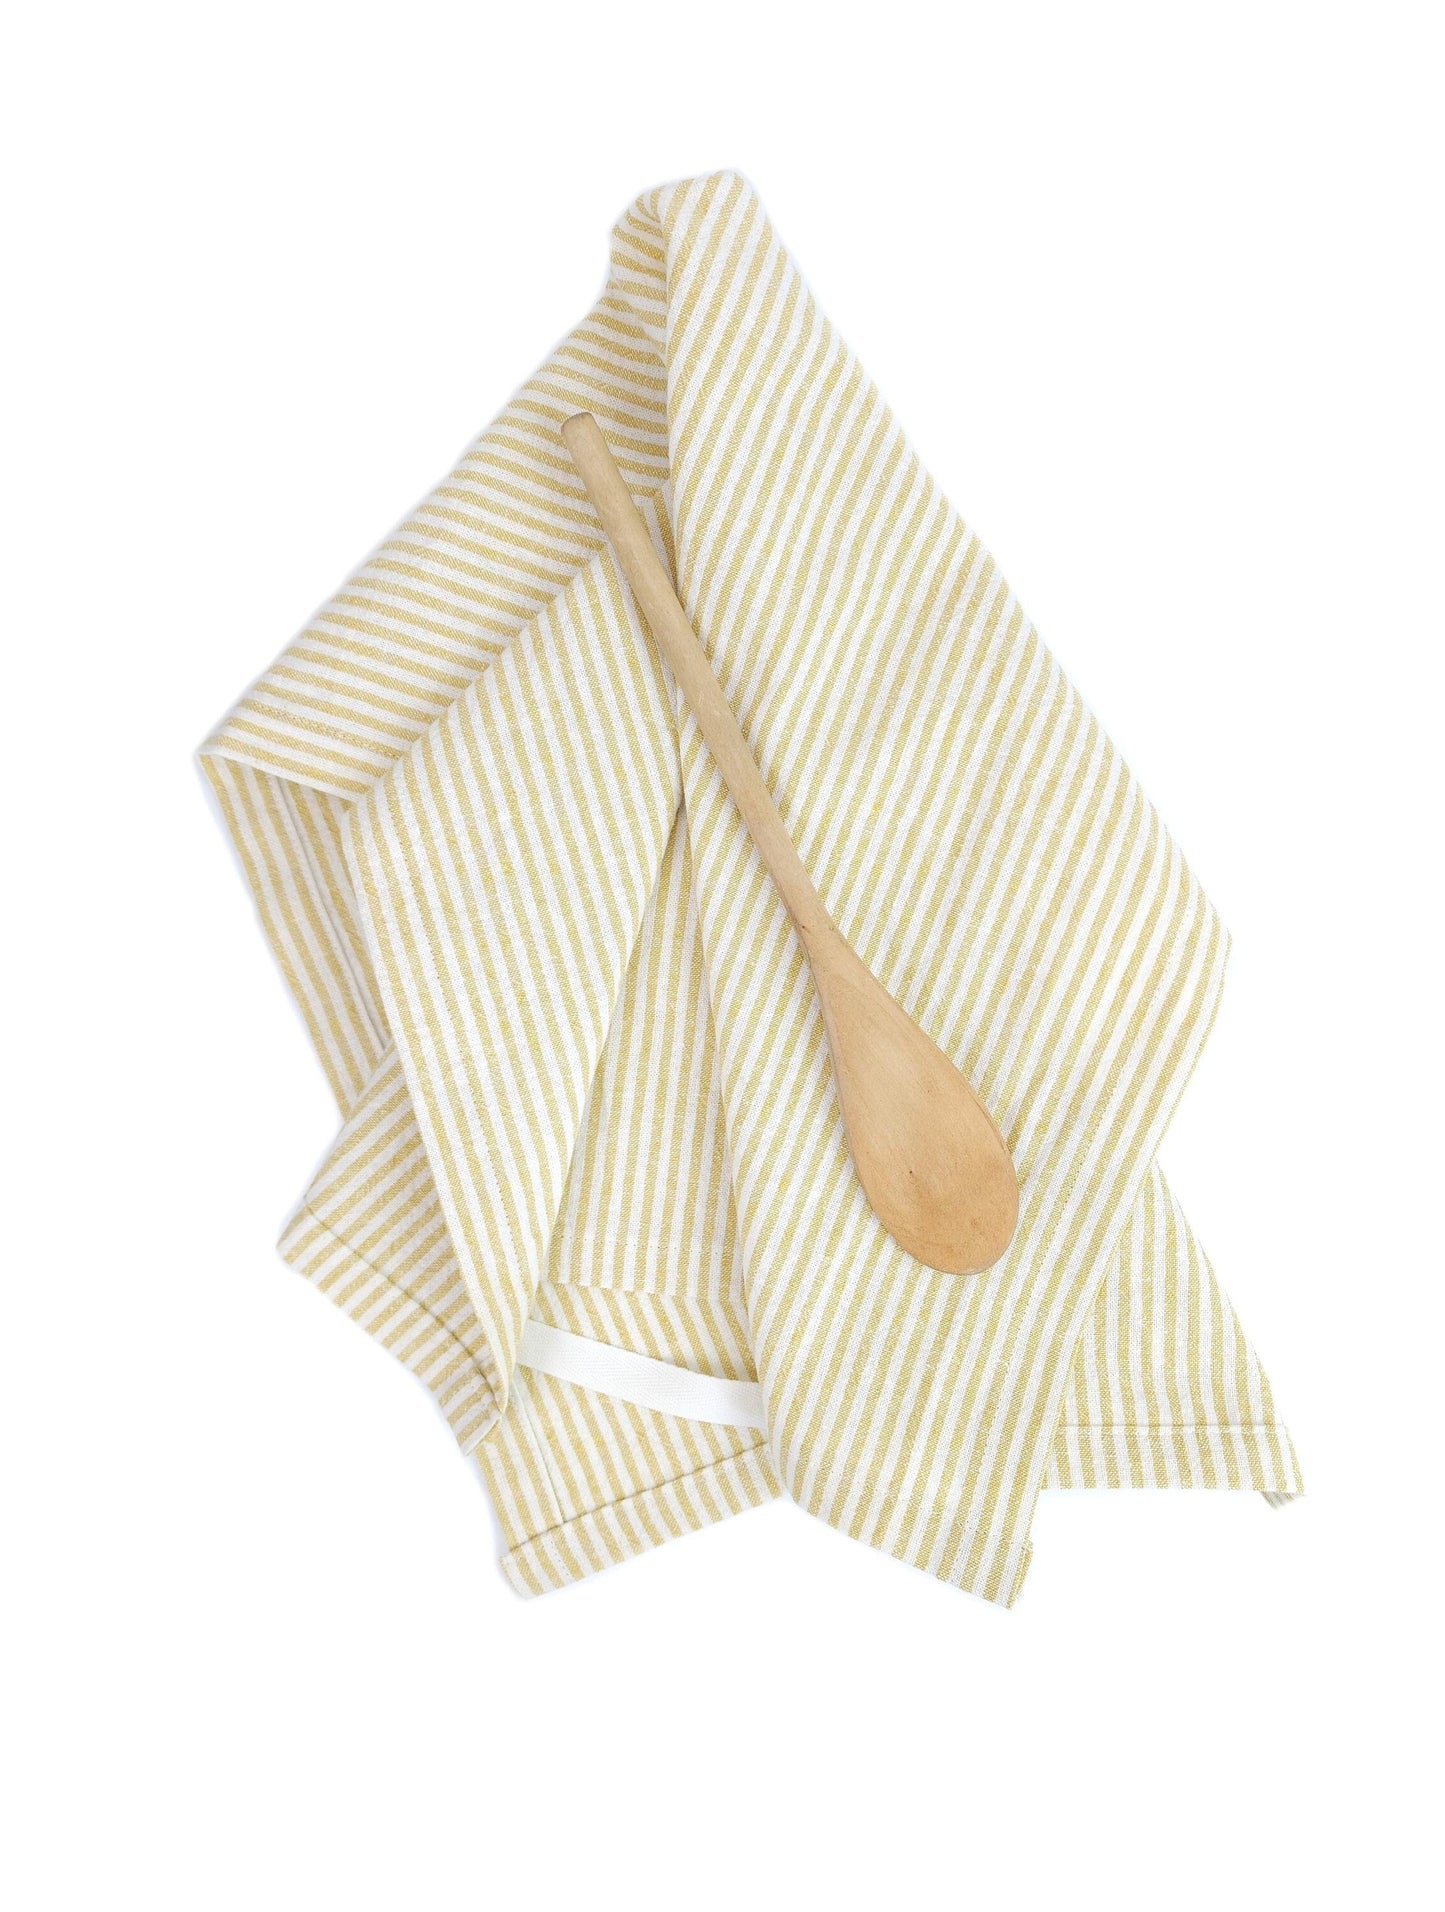 Yellow Striped Linen Towel